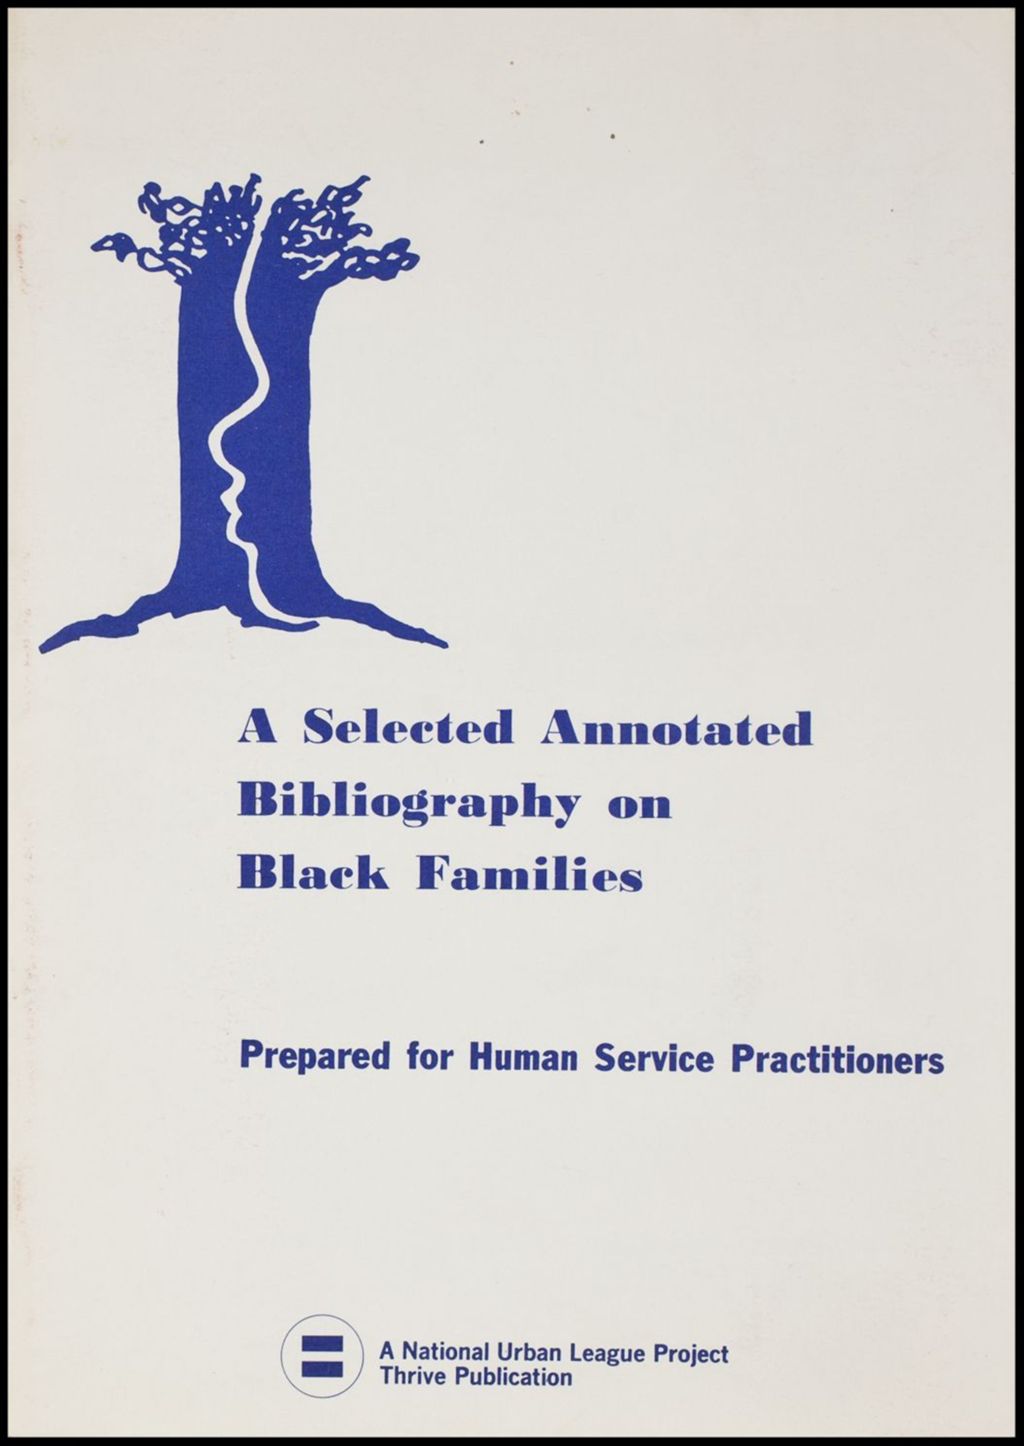 UL Bibliography on Black Families, 1977 (Folder IV-729)